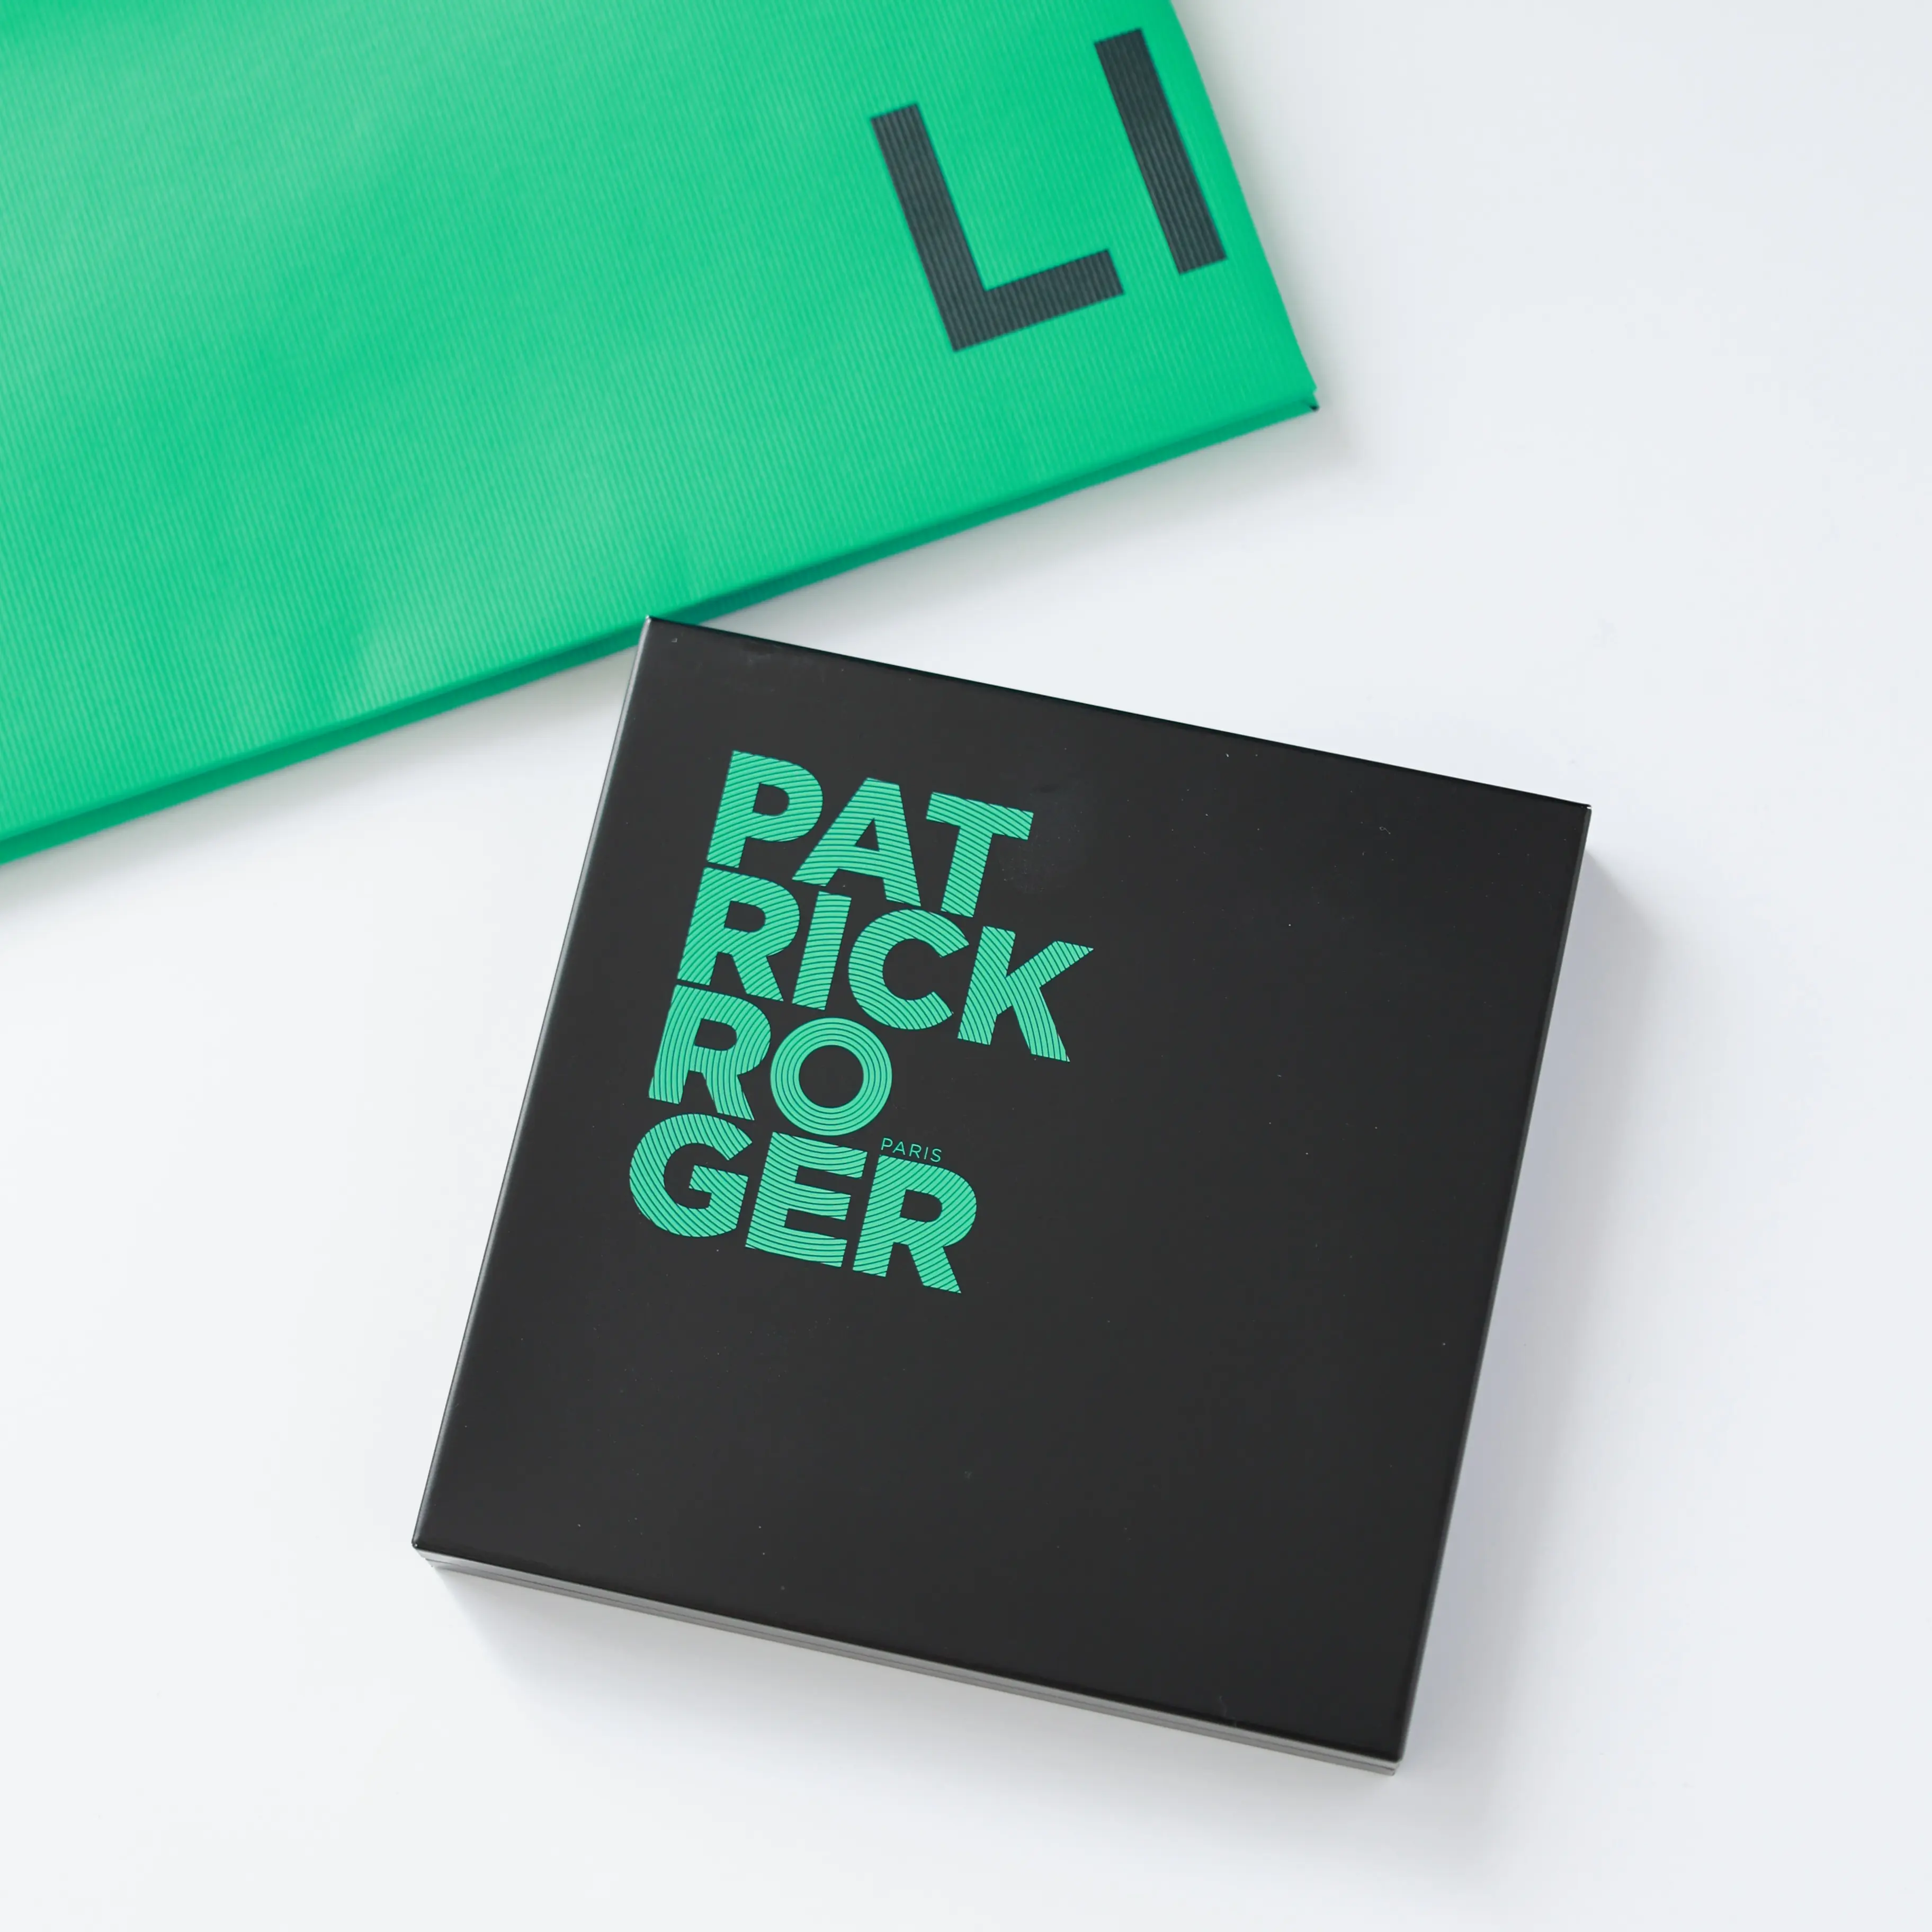 PATRICK ROGER 公式ホームページ